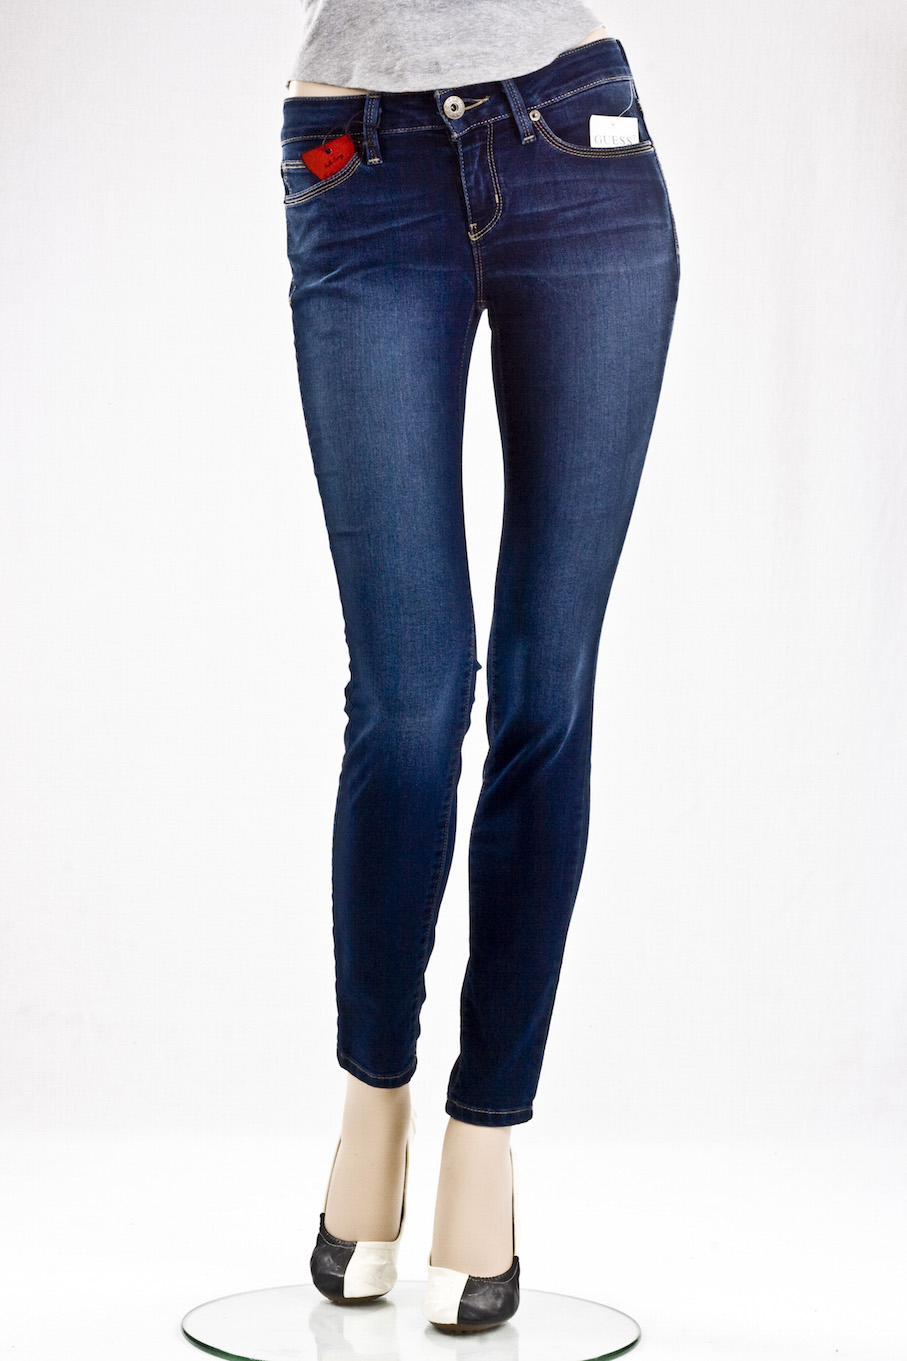 Женские джинсы GUESS "Скинни" Curvy Skinny Dark Wash интернет-магазин Fashion Jeans